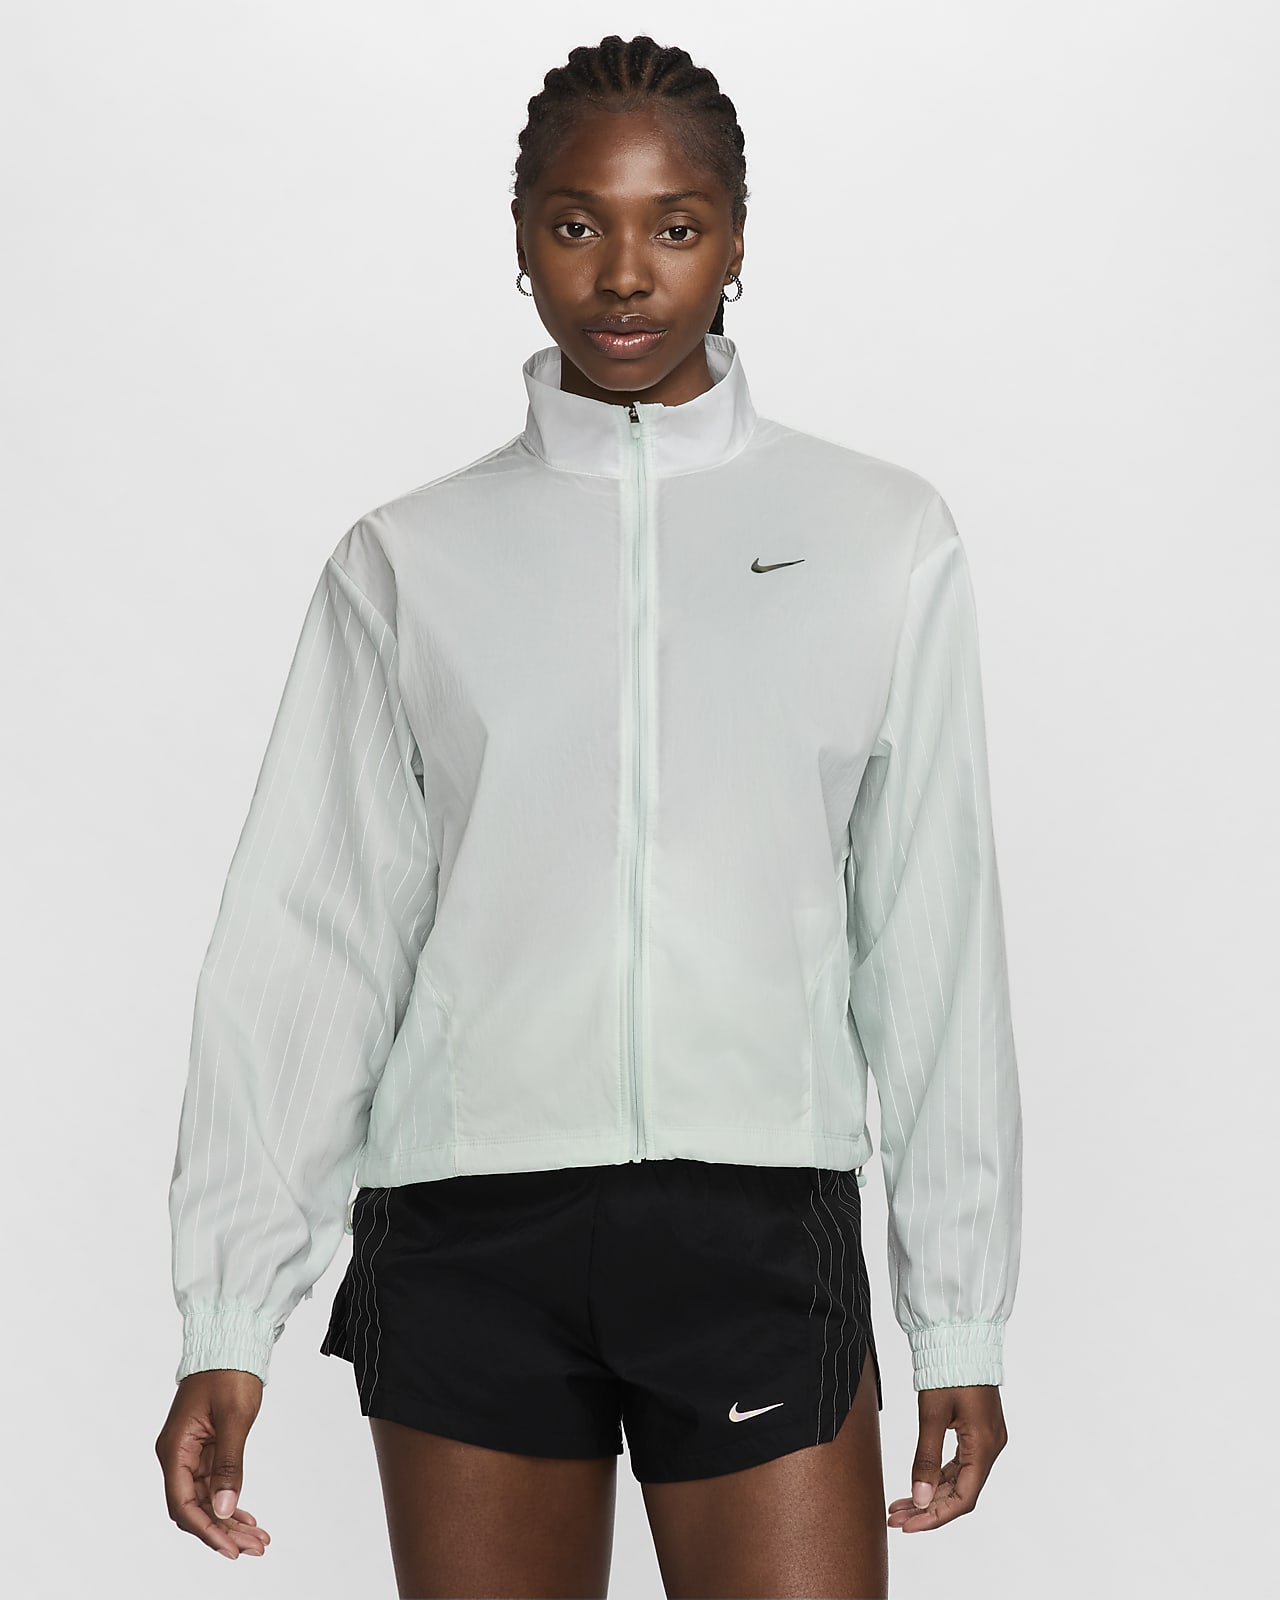 Nike Running Division Women's Running Jacket